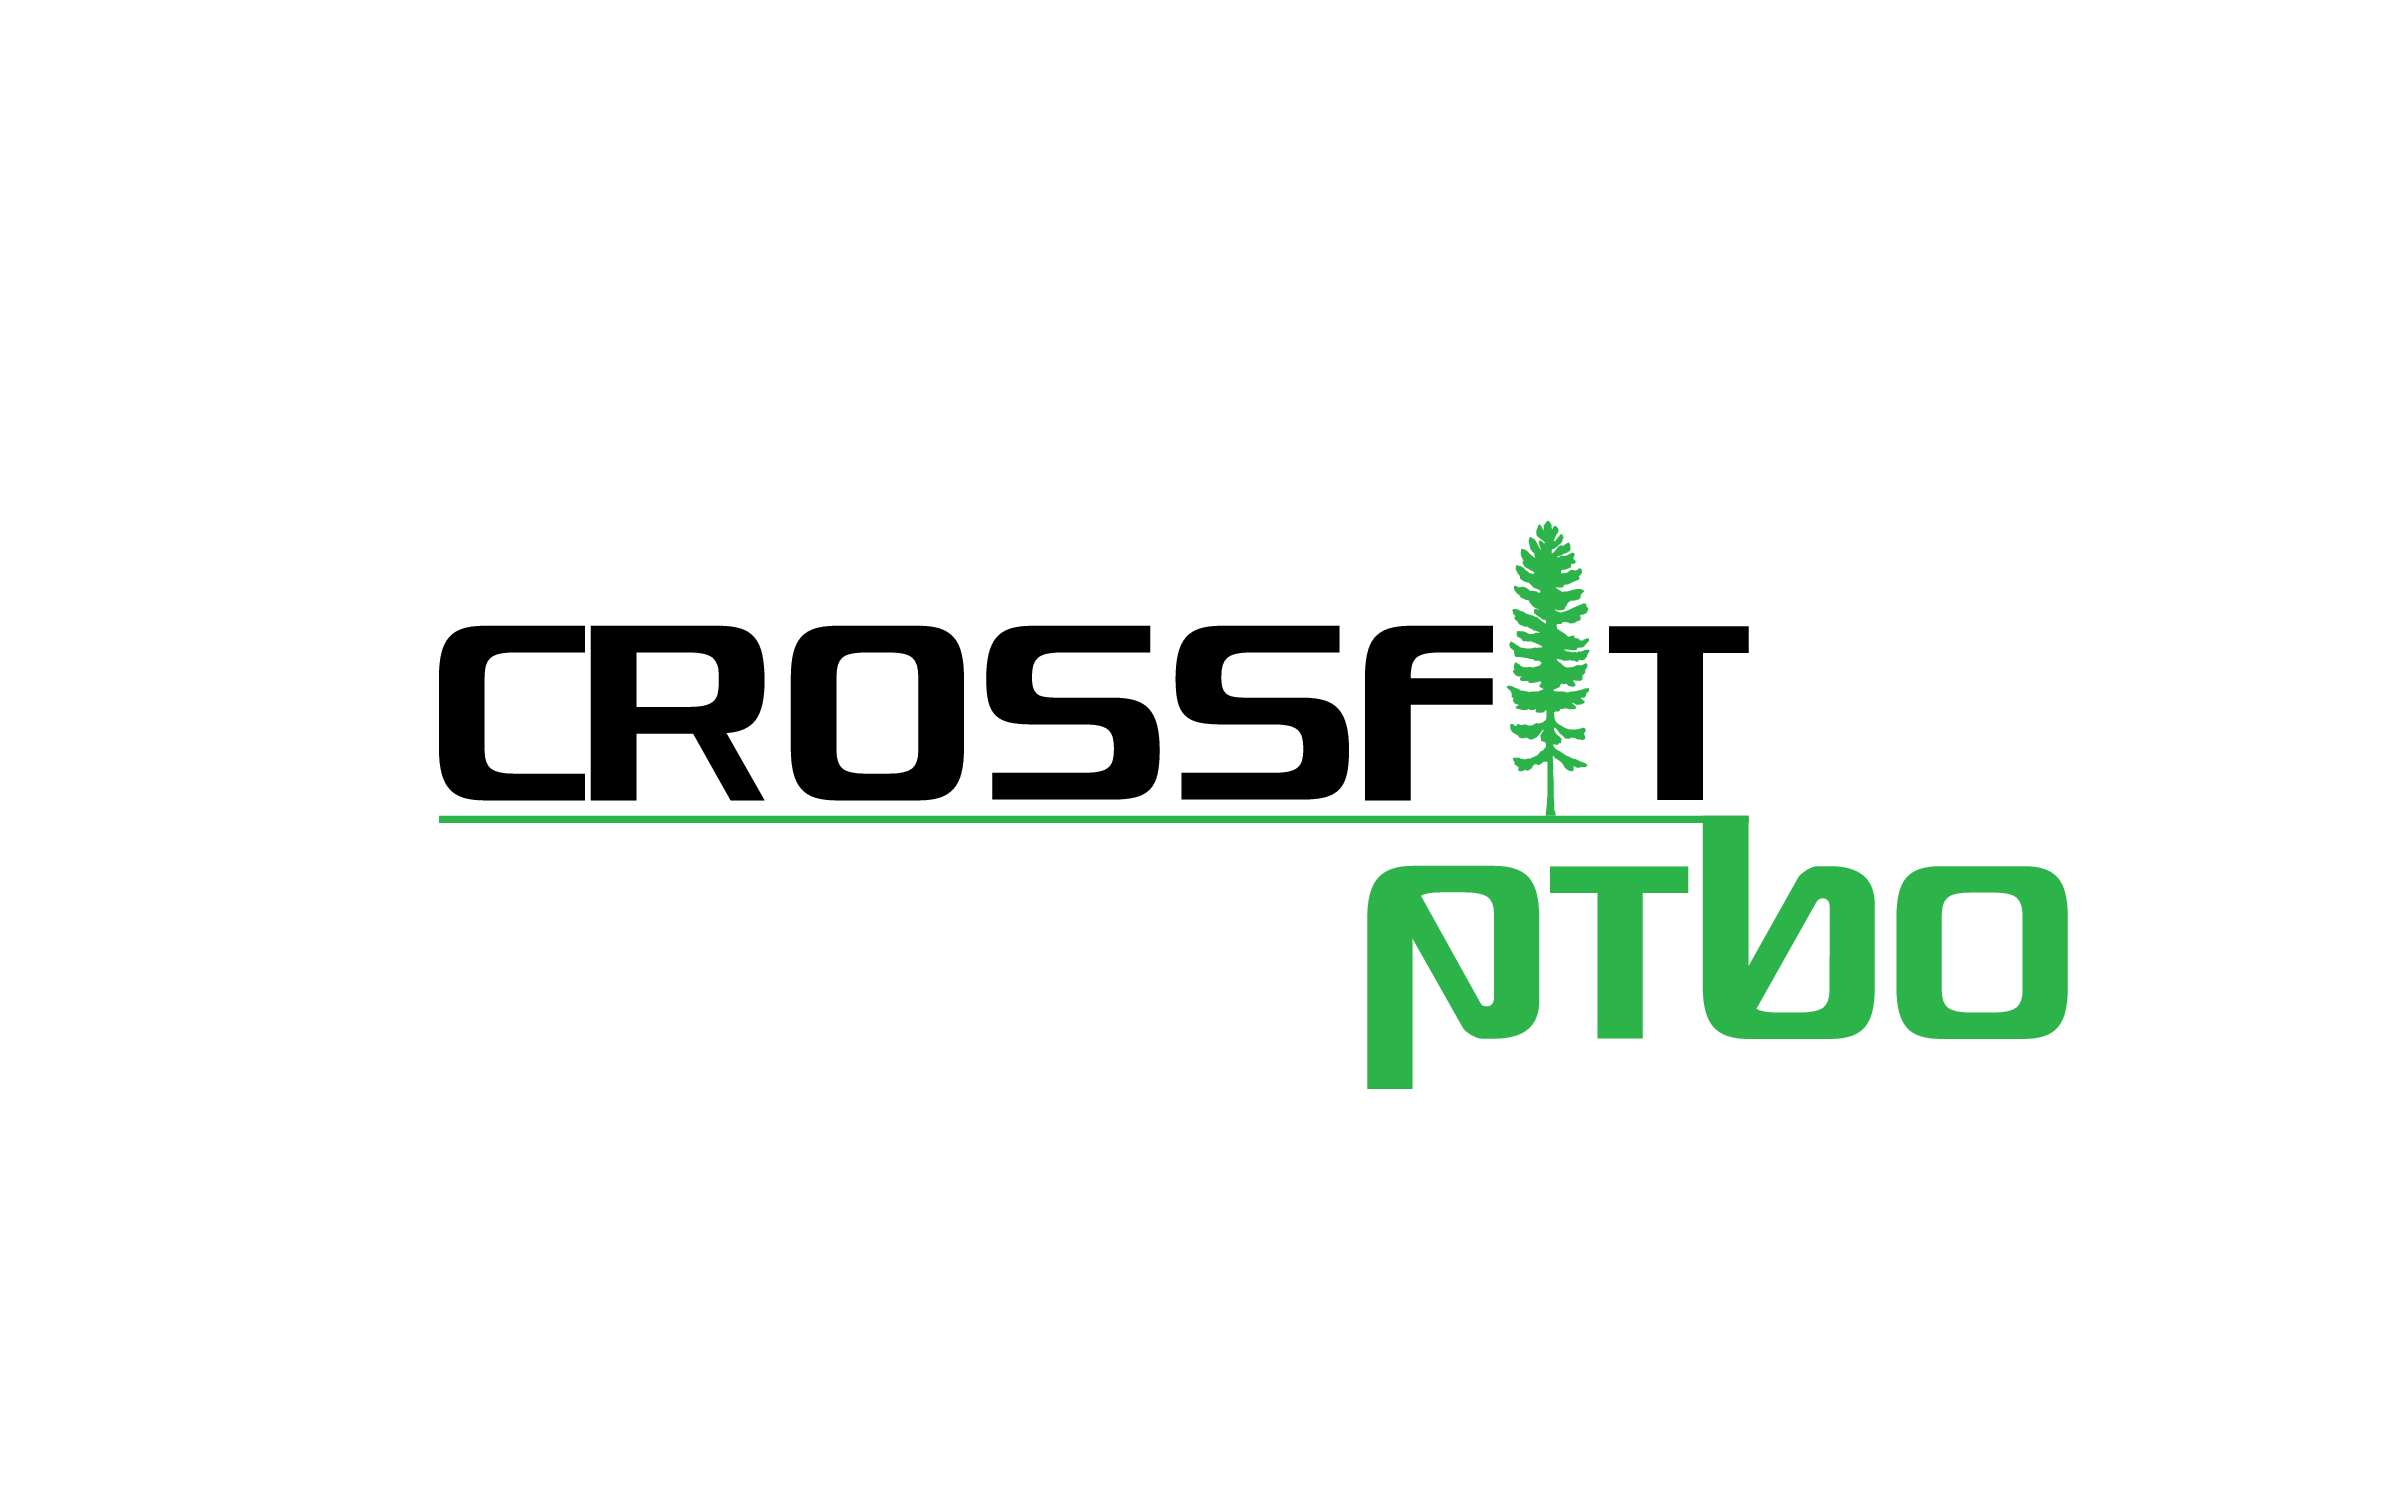 CrossFit PTBO logo